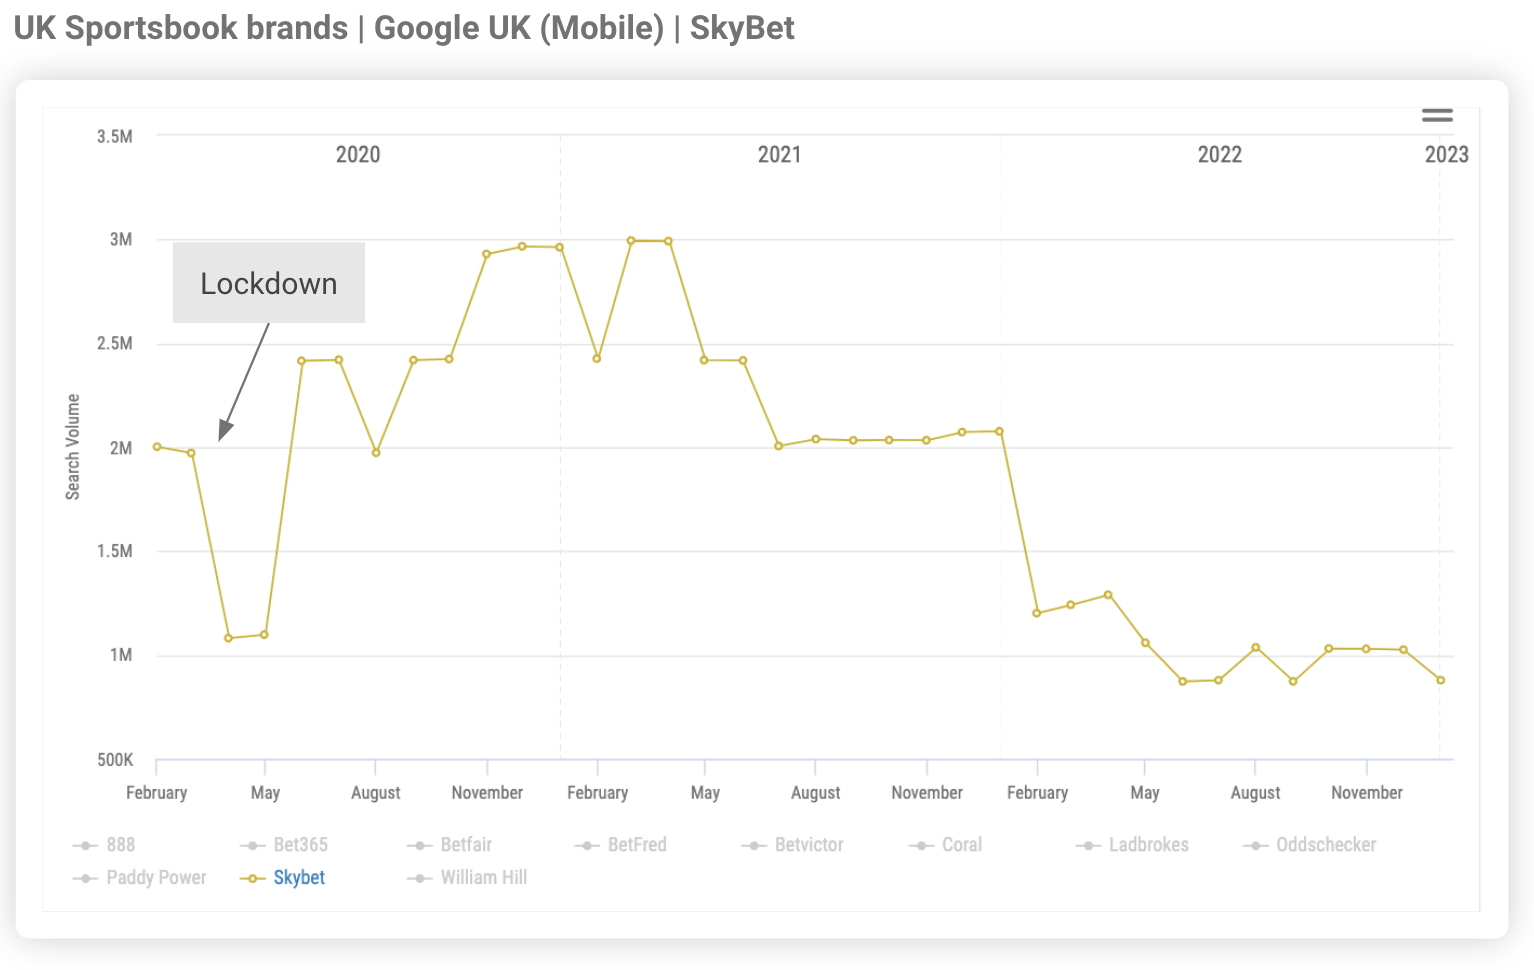 Skybet - brand search decline 2020-2022